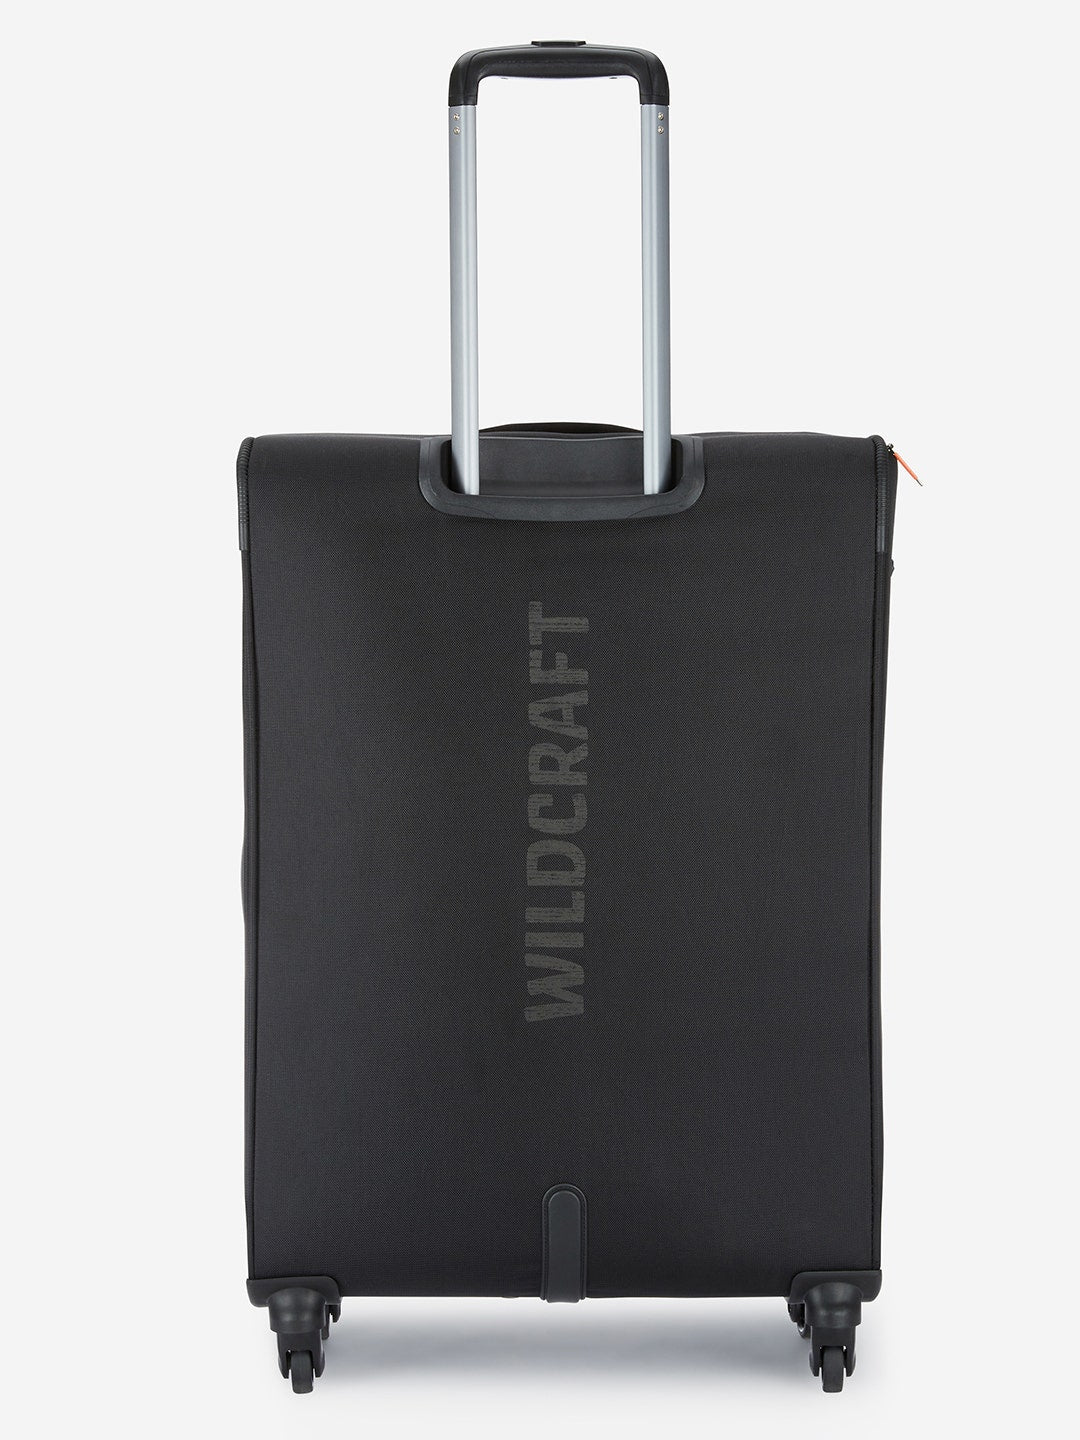 Wildcraft large size luggage travel trolley bag best quality luggage bag  under 5000 .... - YouTube